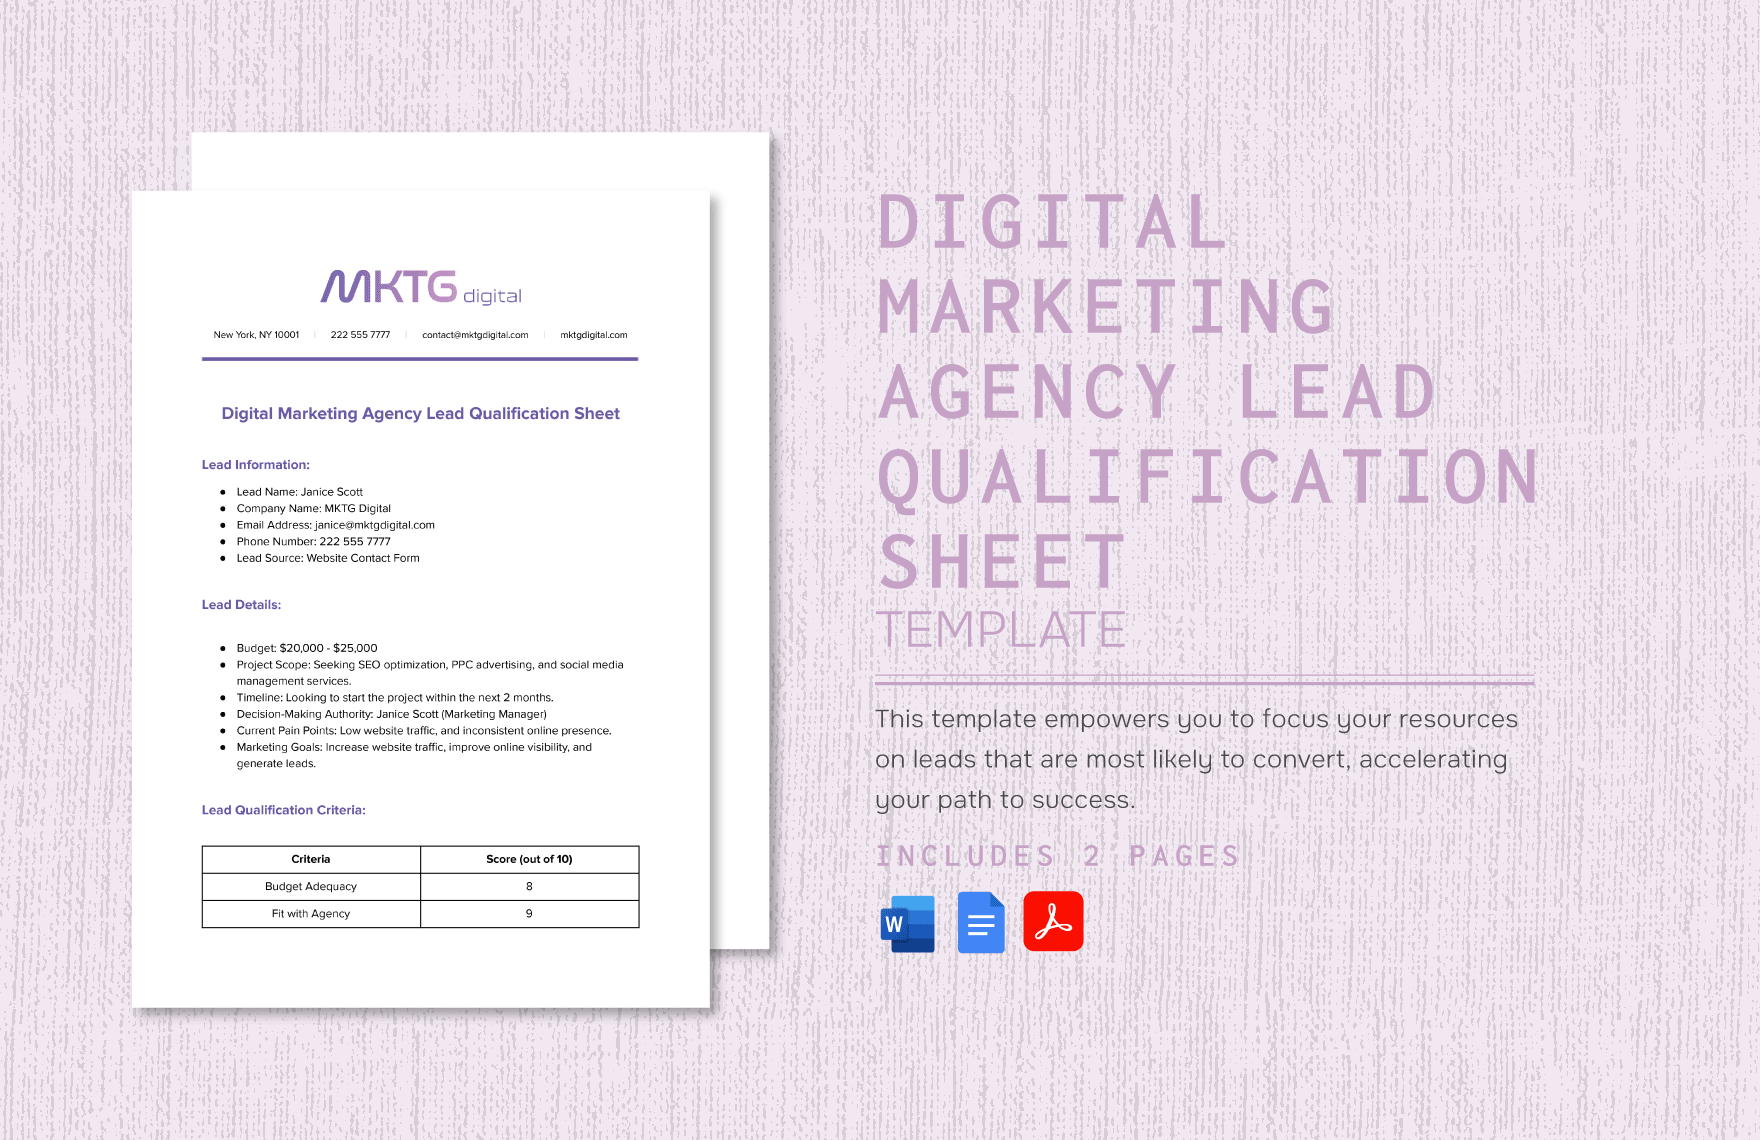 Digital Marketing Agency Lead Qualification Sheet Template